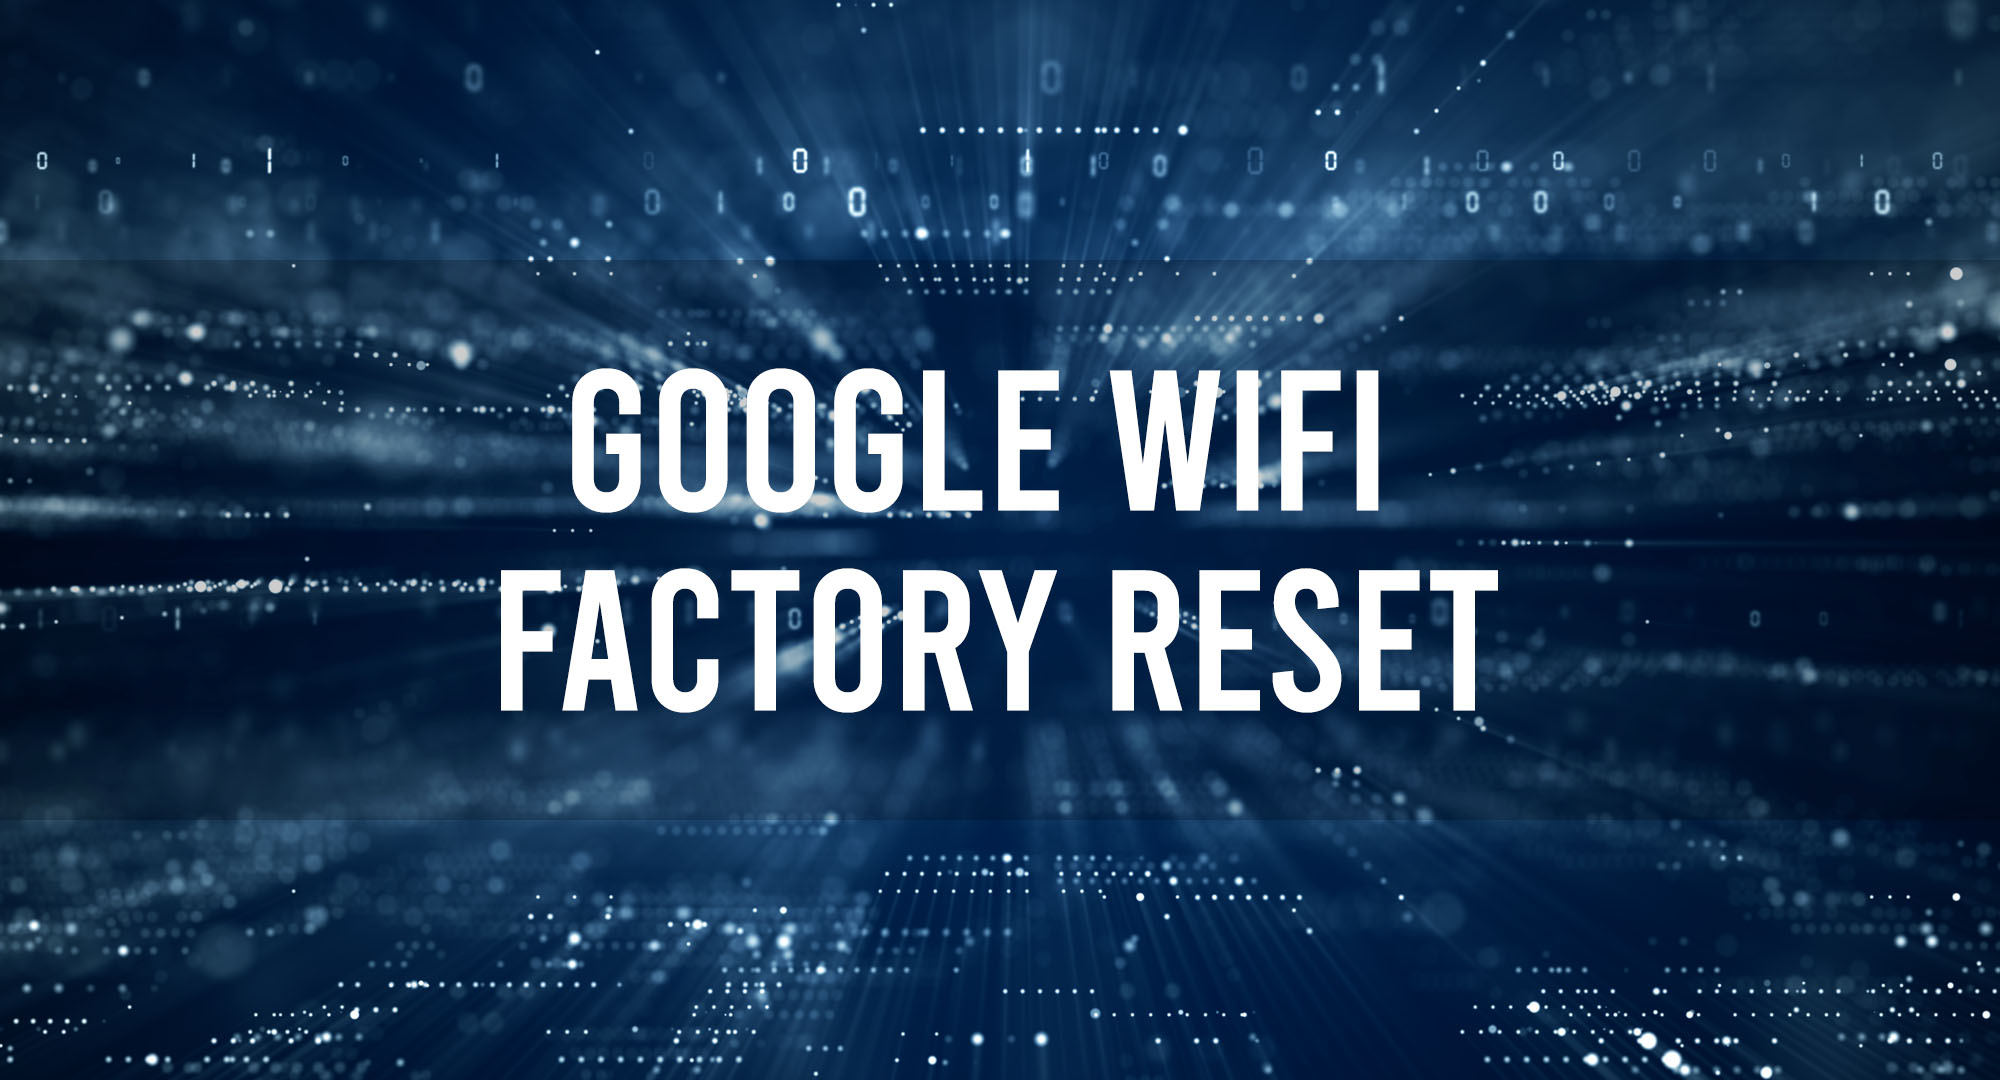 Google WIFI Factory Reset